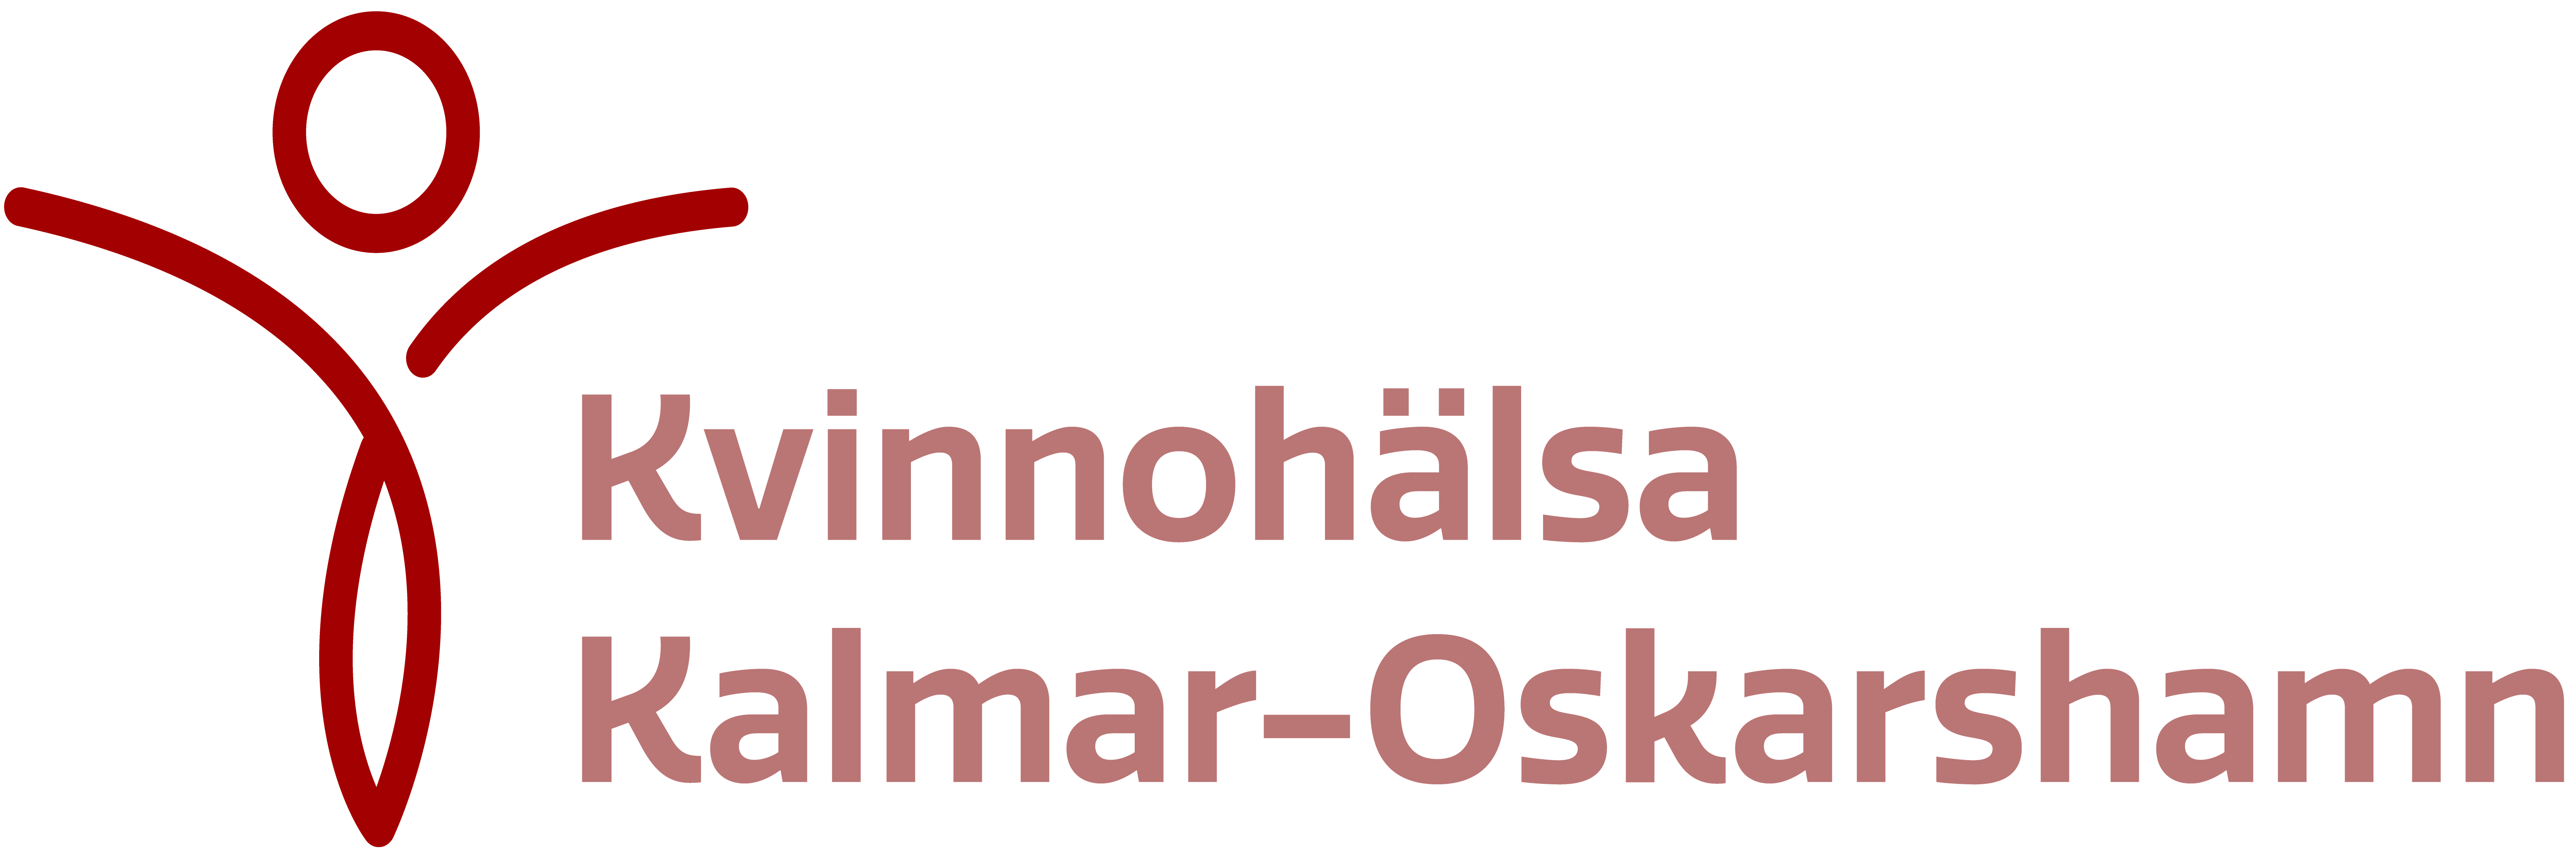 Kvinnohälsa Kalmar Oskarshamn